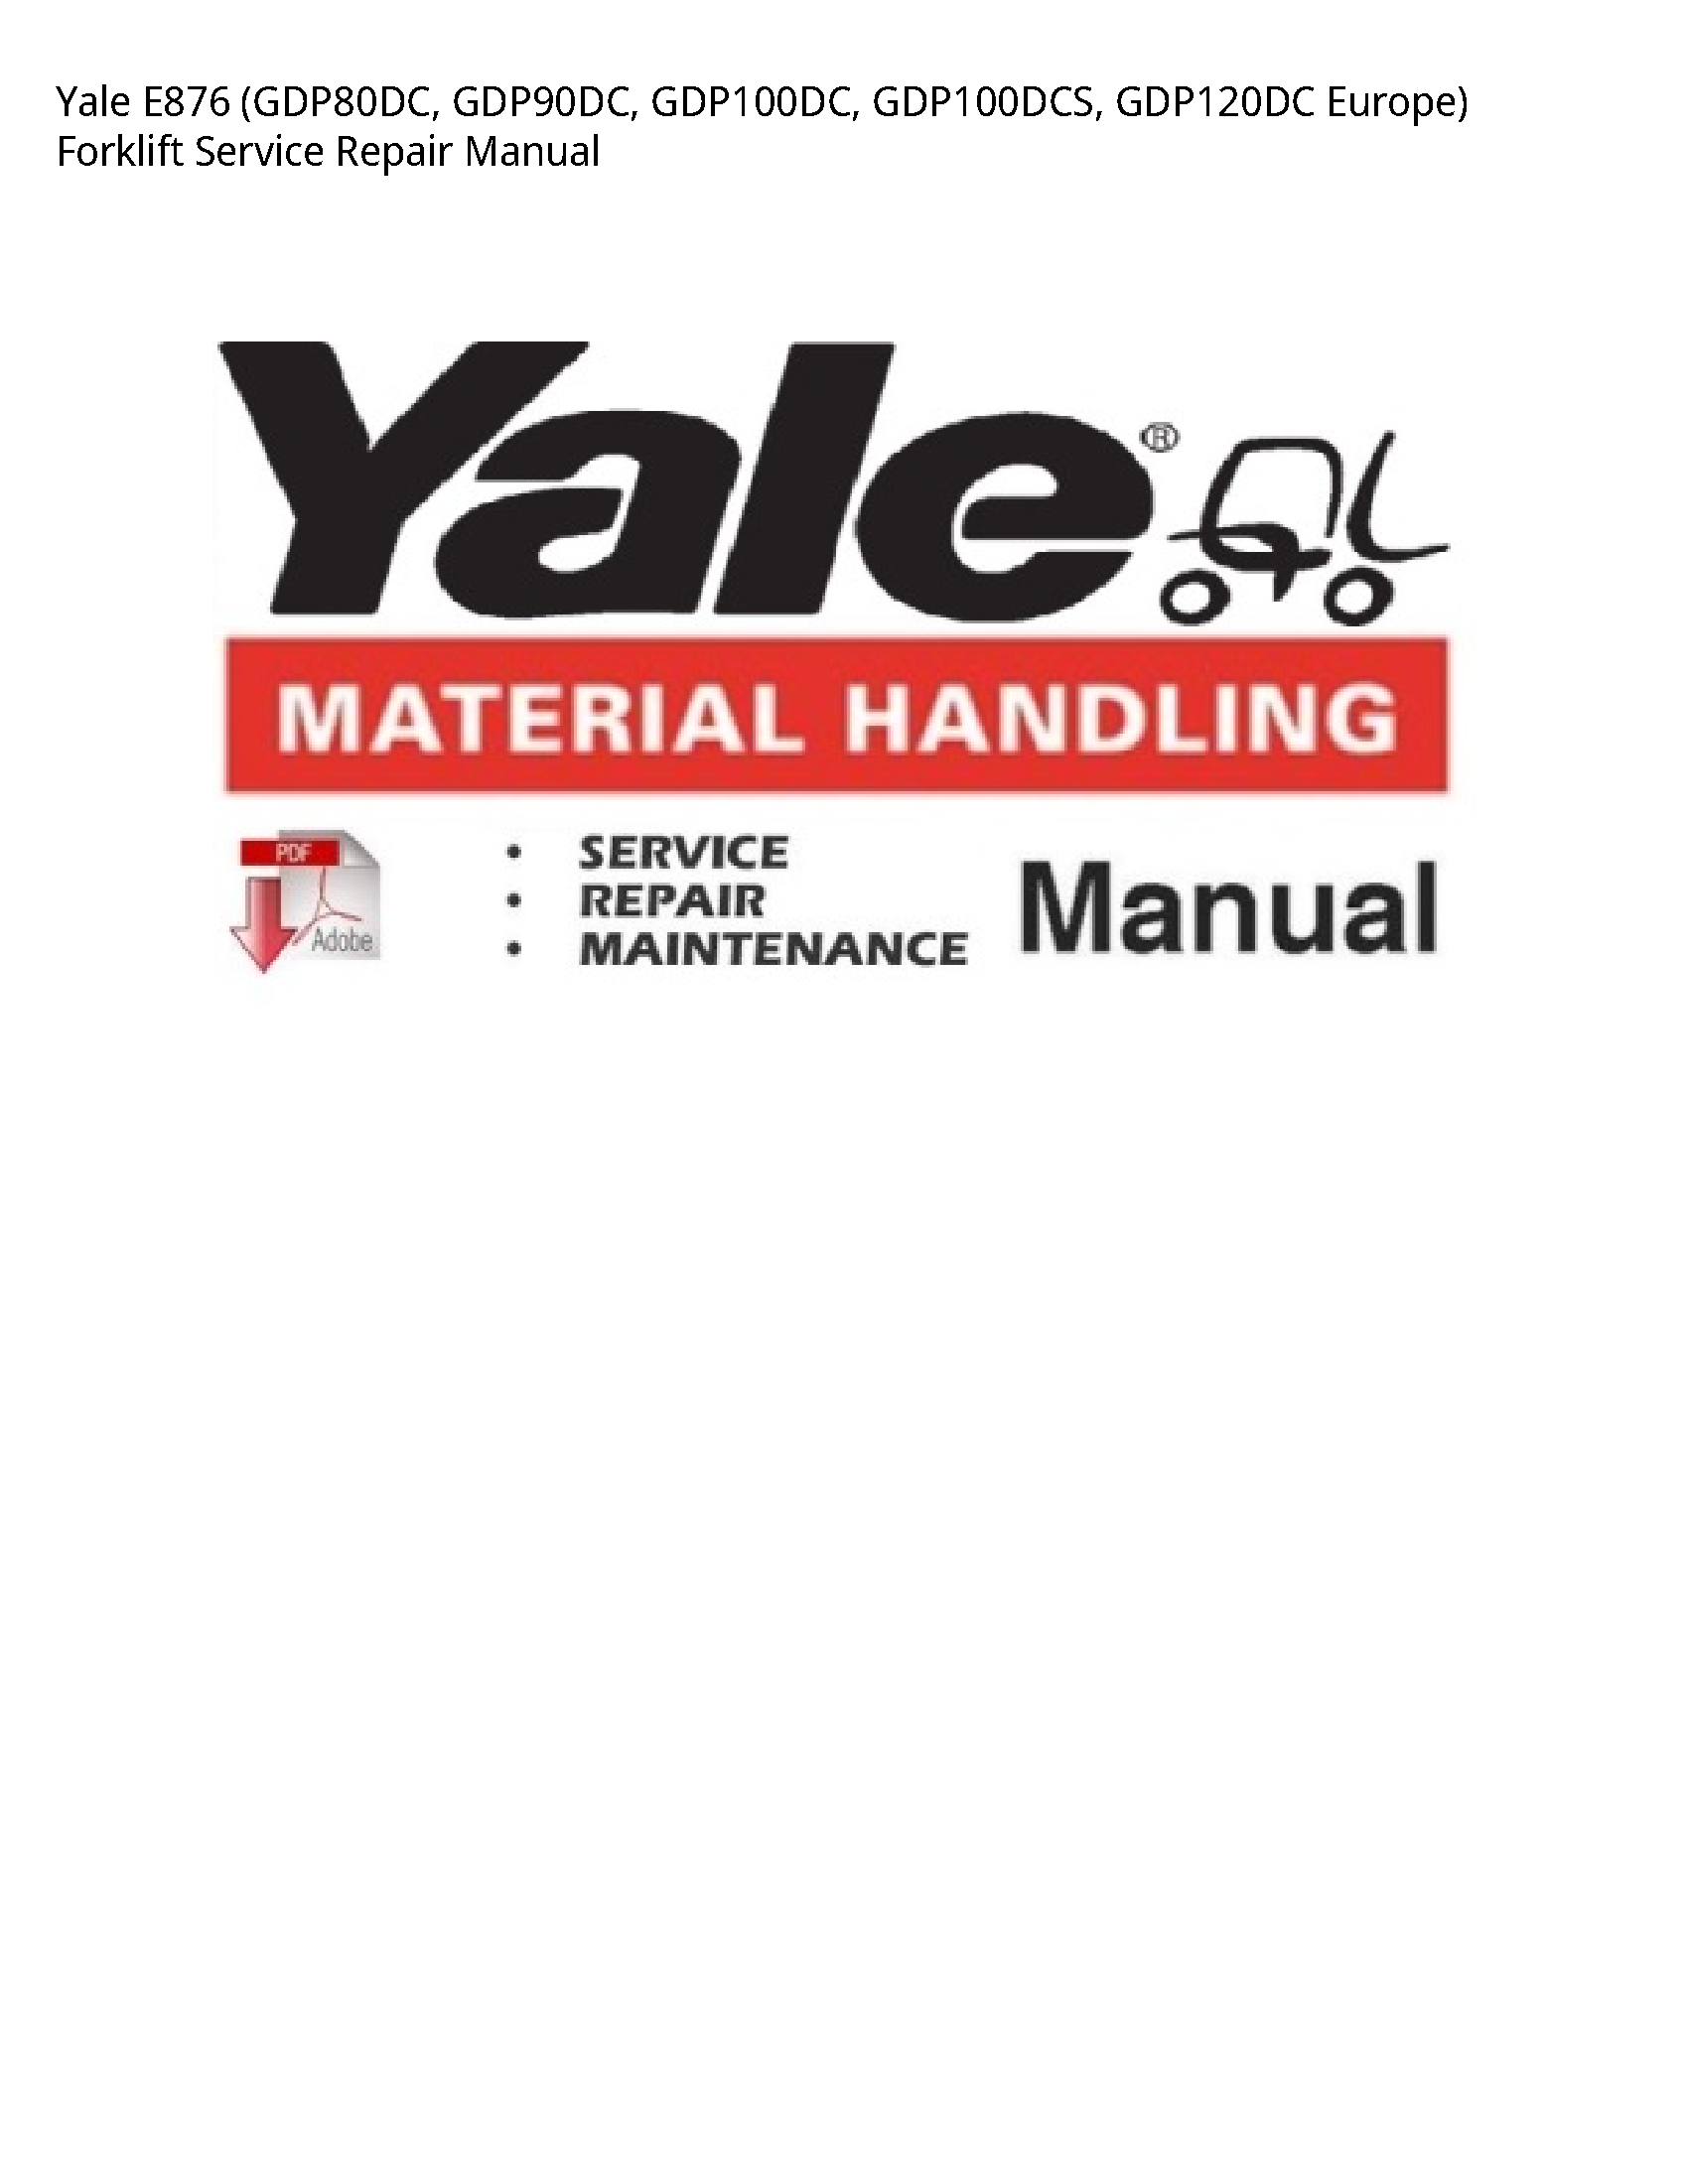 Yale E876 Europe) Forklift manual